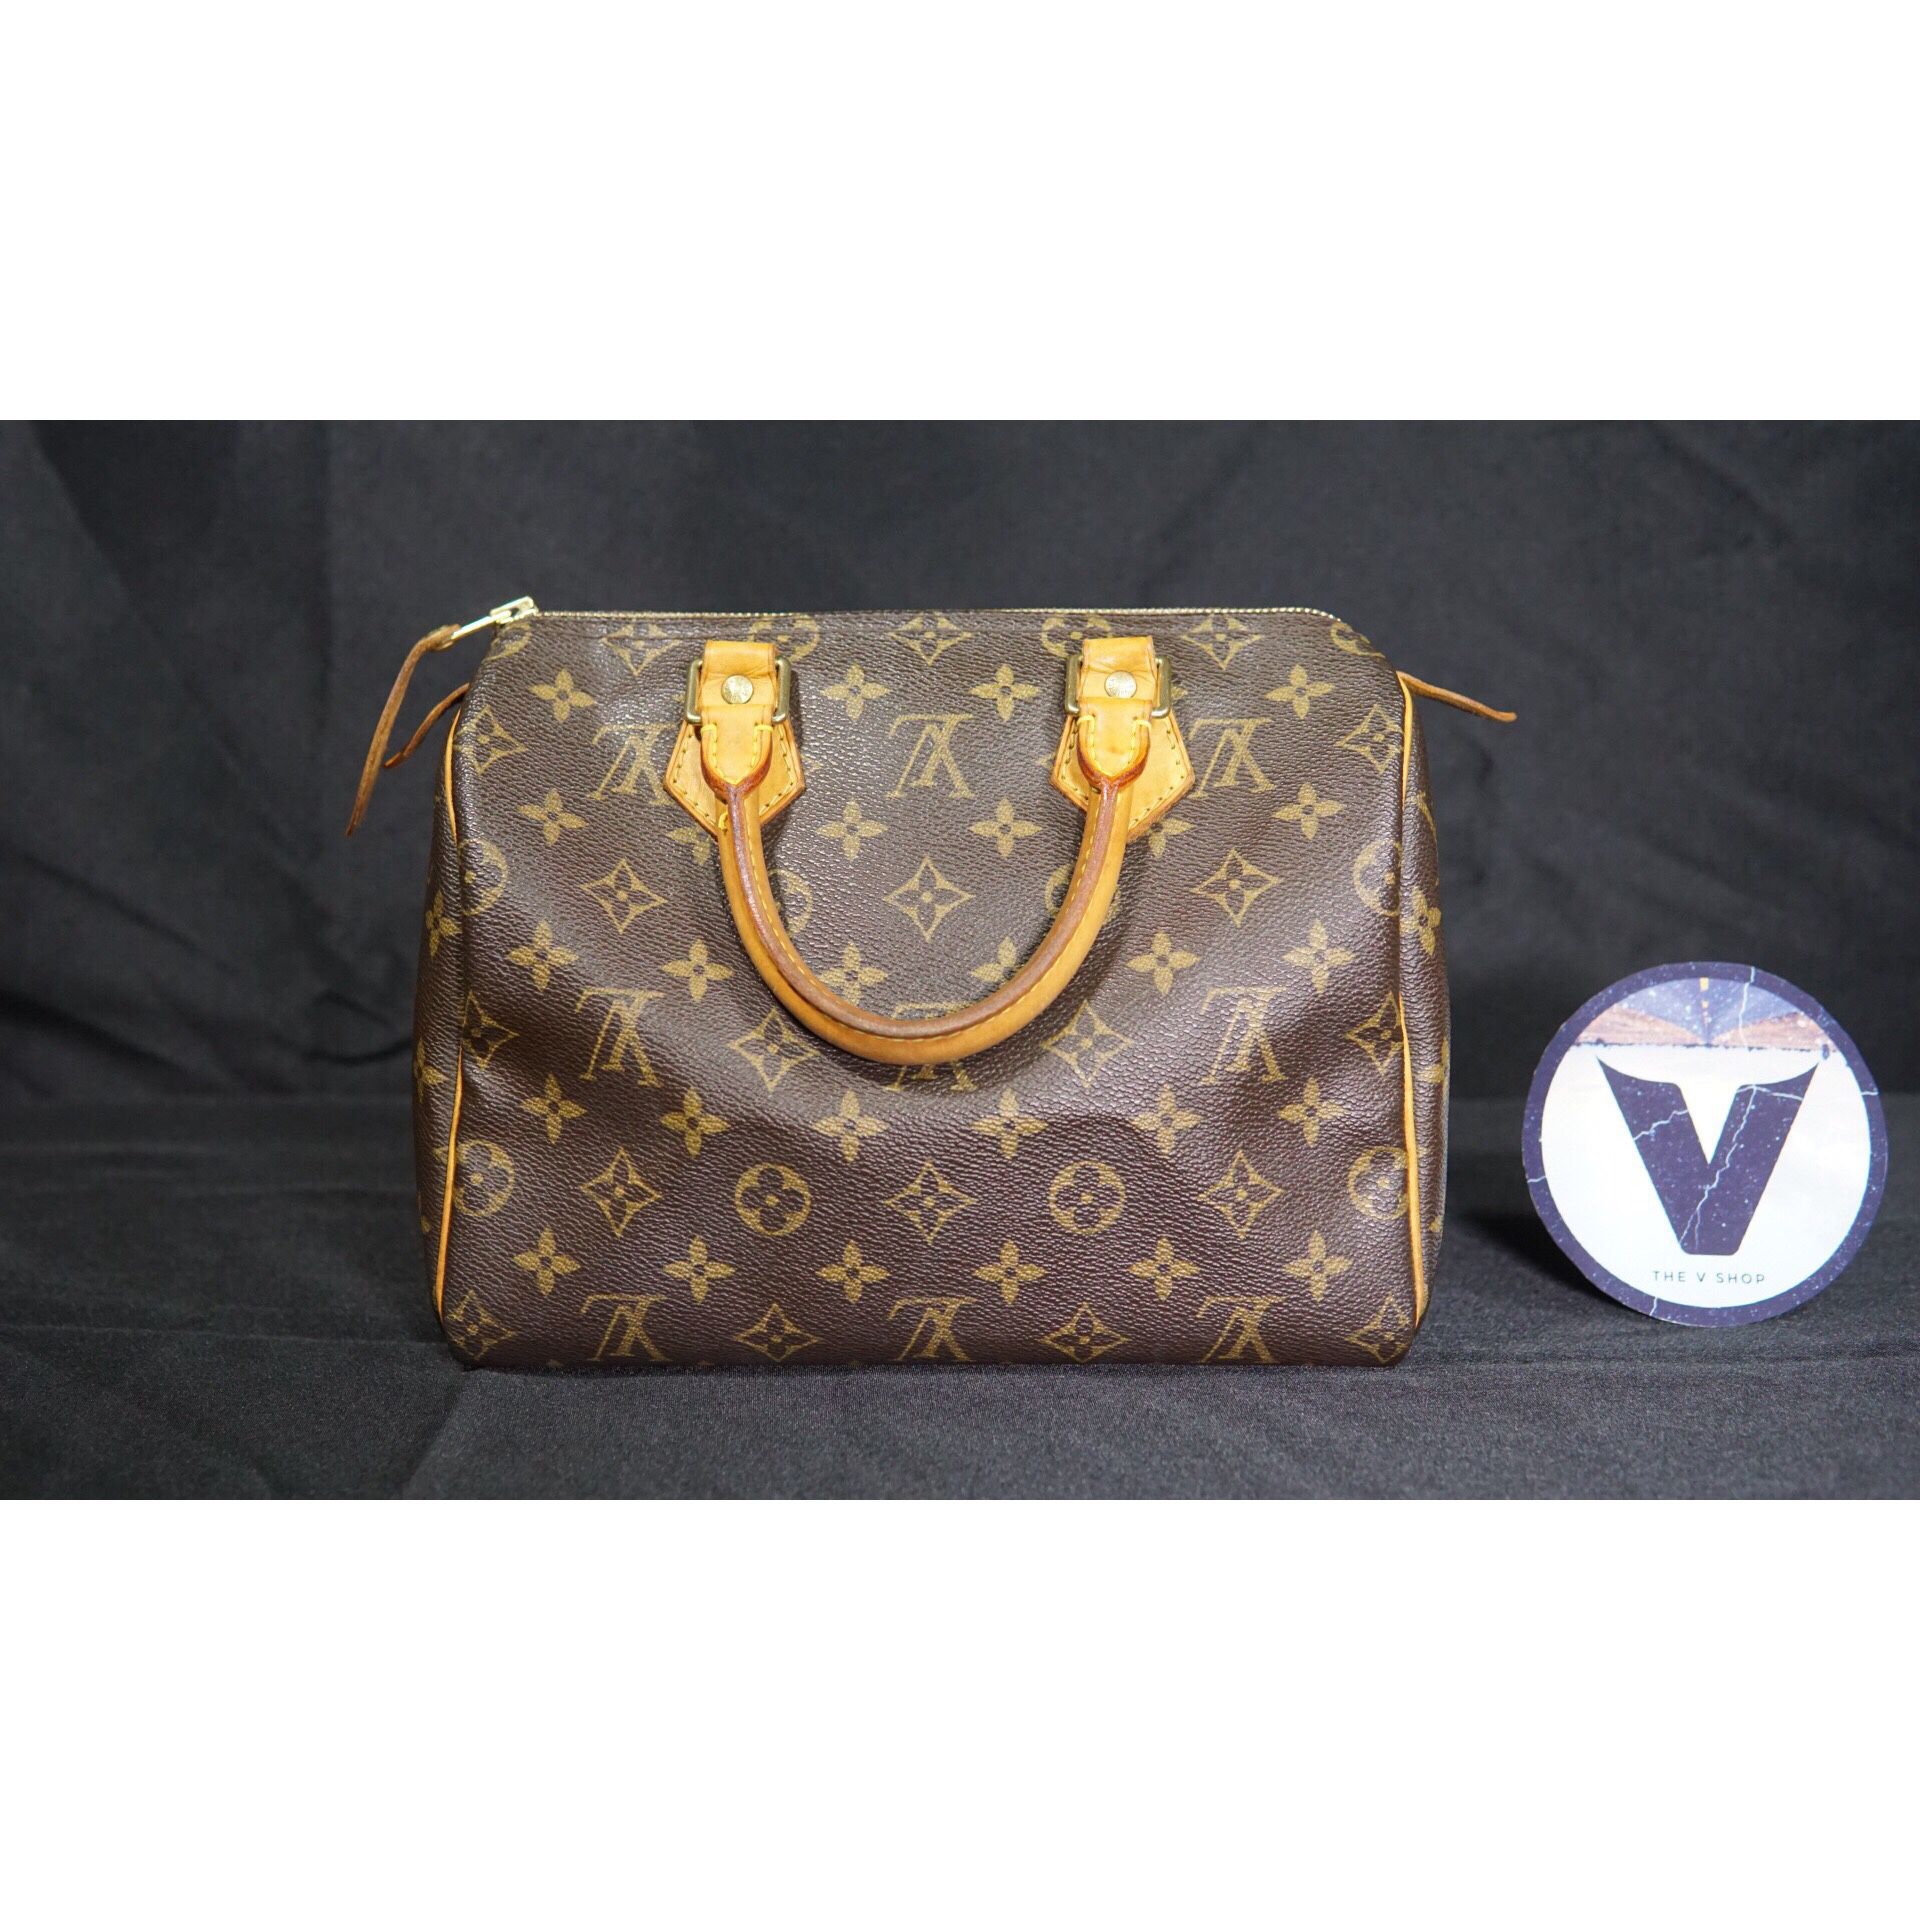 Vintage Louis Vuitton Purse for Sale in Pomona, CA - OfferUp